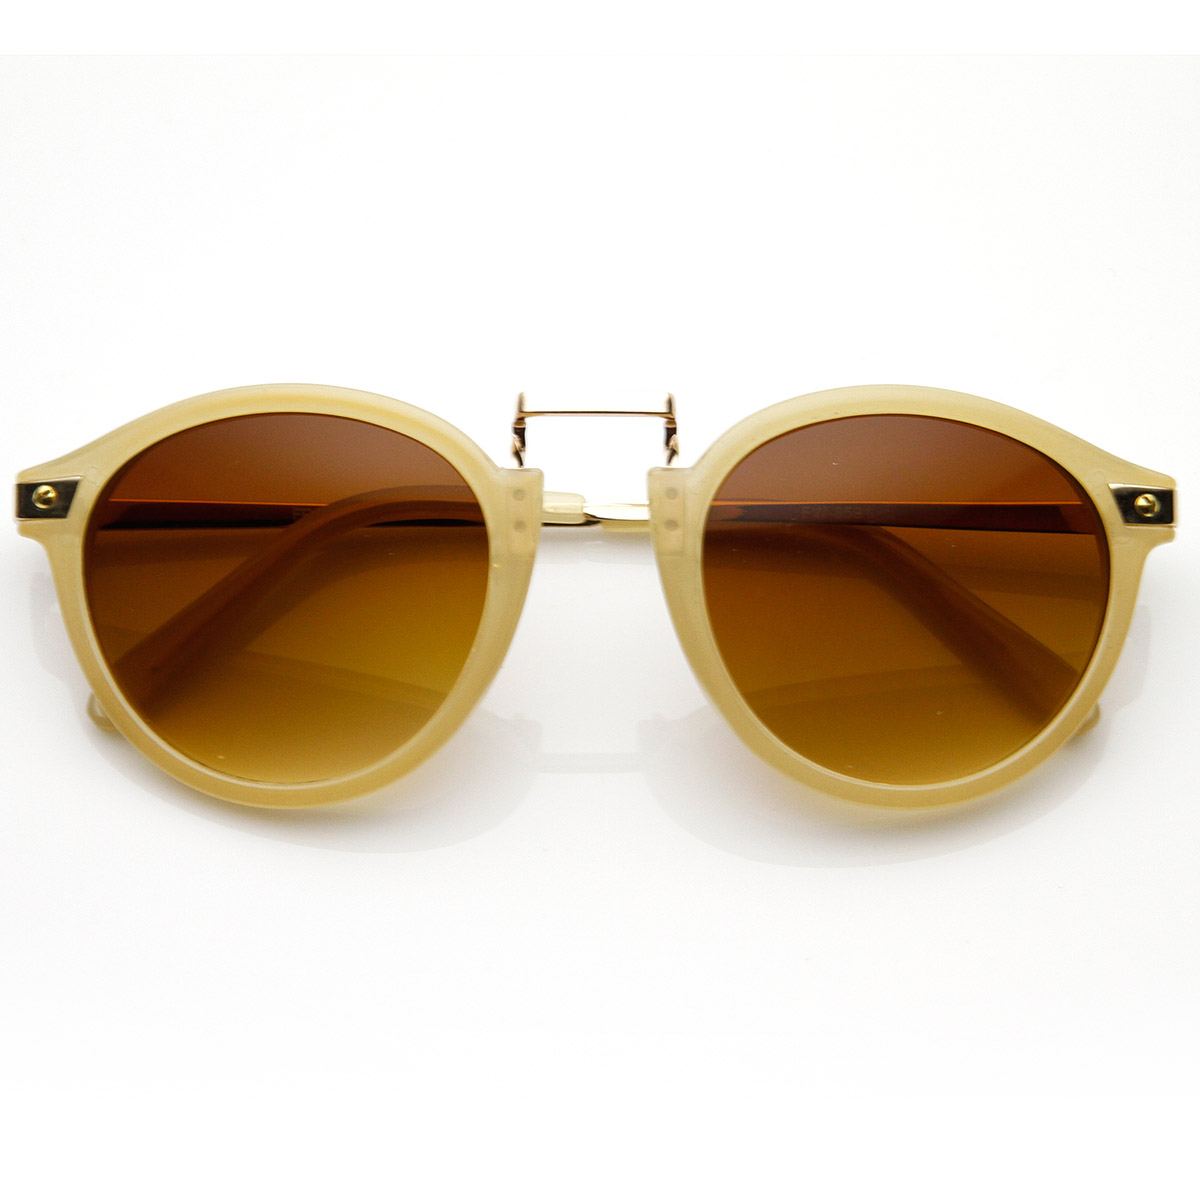 Vintage Inspired Round Horned Rim P 3 Frame Retro Sunglasses